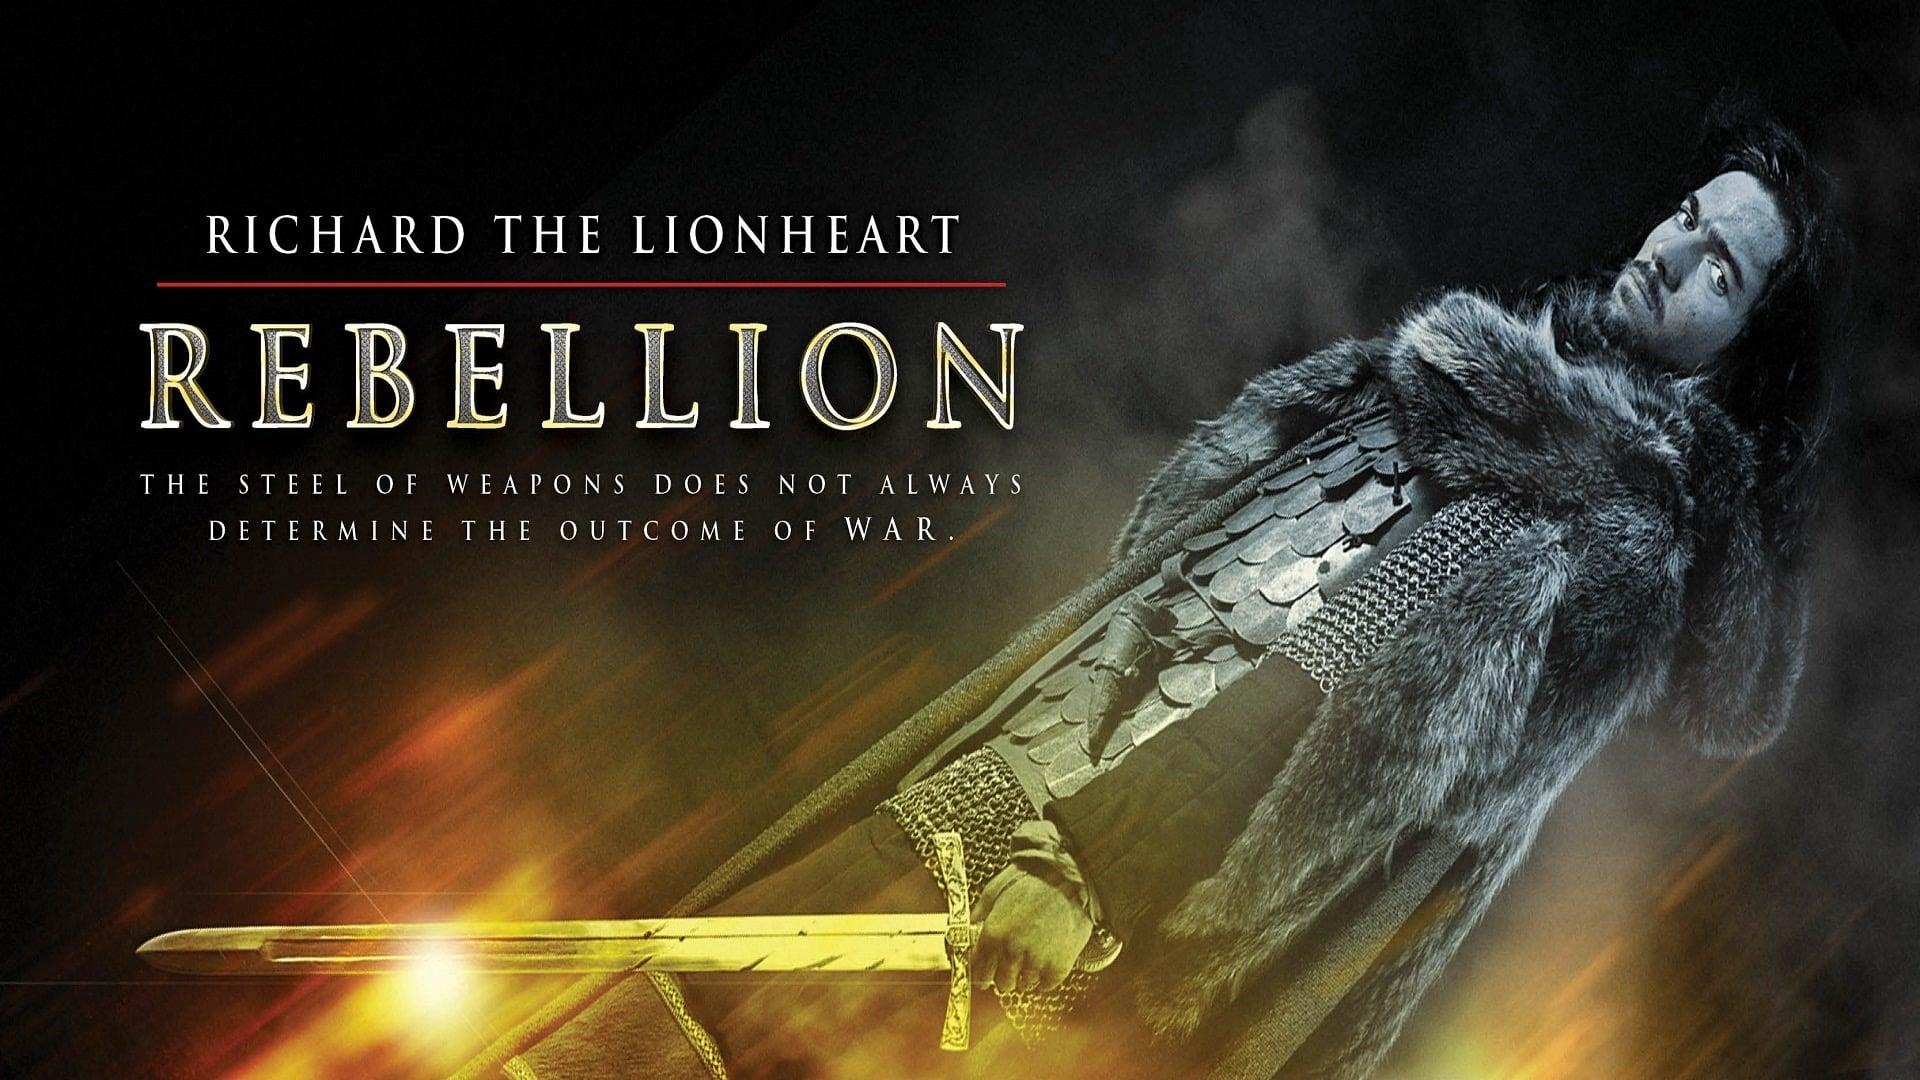 Richard the Lionheart: Rebellion backdrop